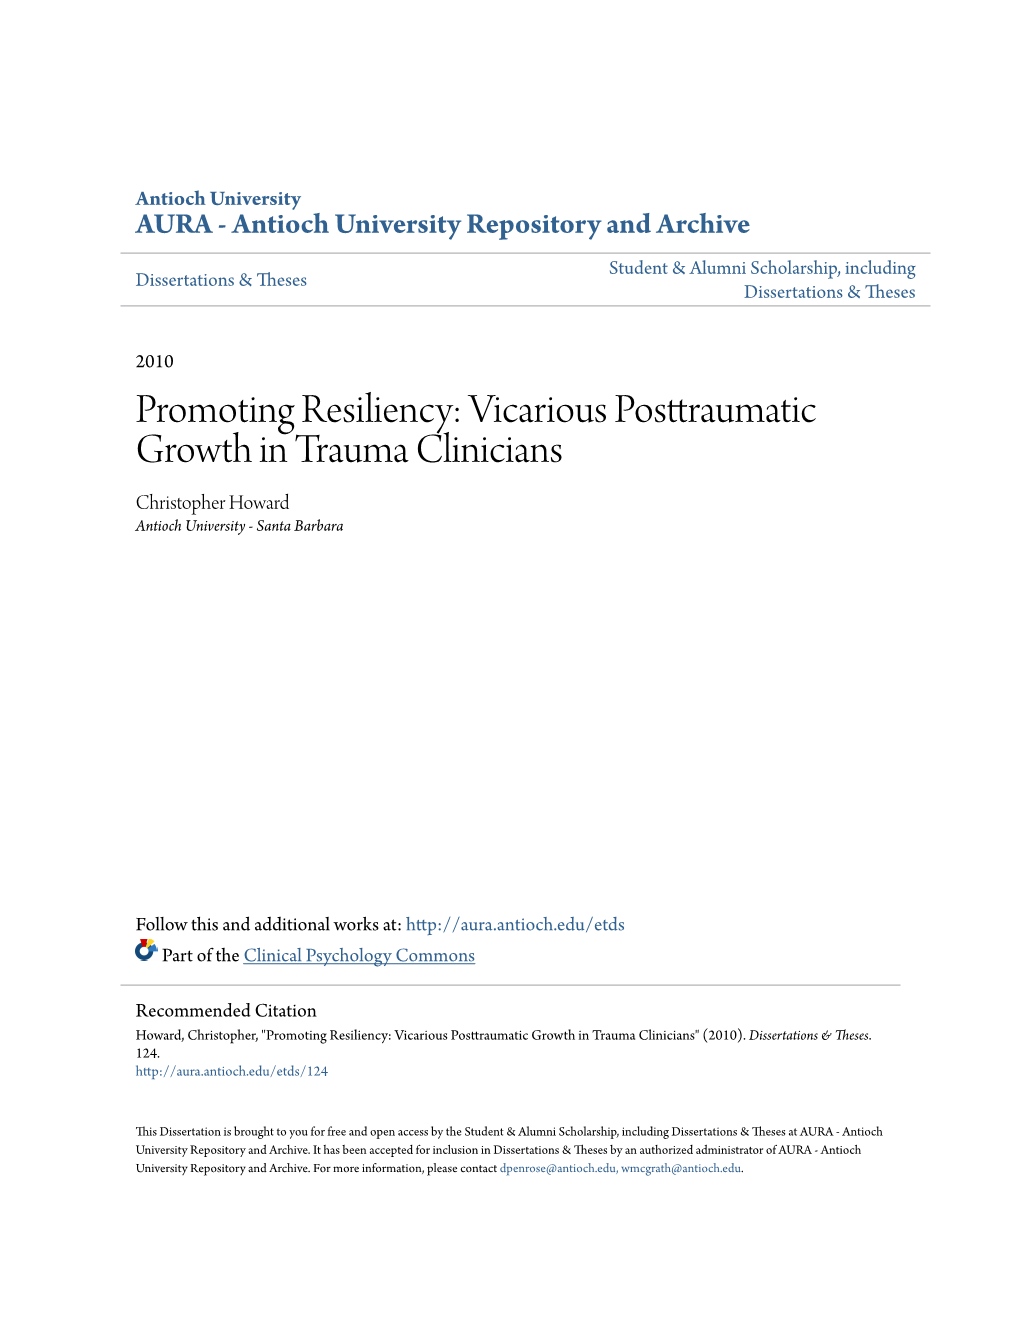 Vicarious Posttraumatic Growth in Trauma Clinicians Christopher Howard Antioch University - Santa Barbara